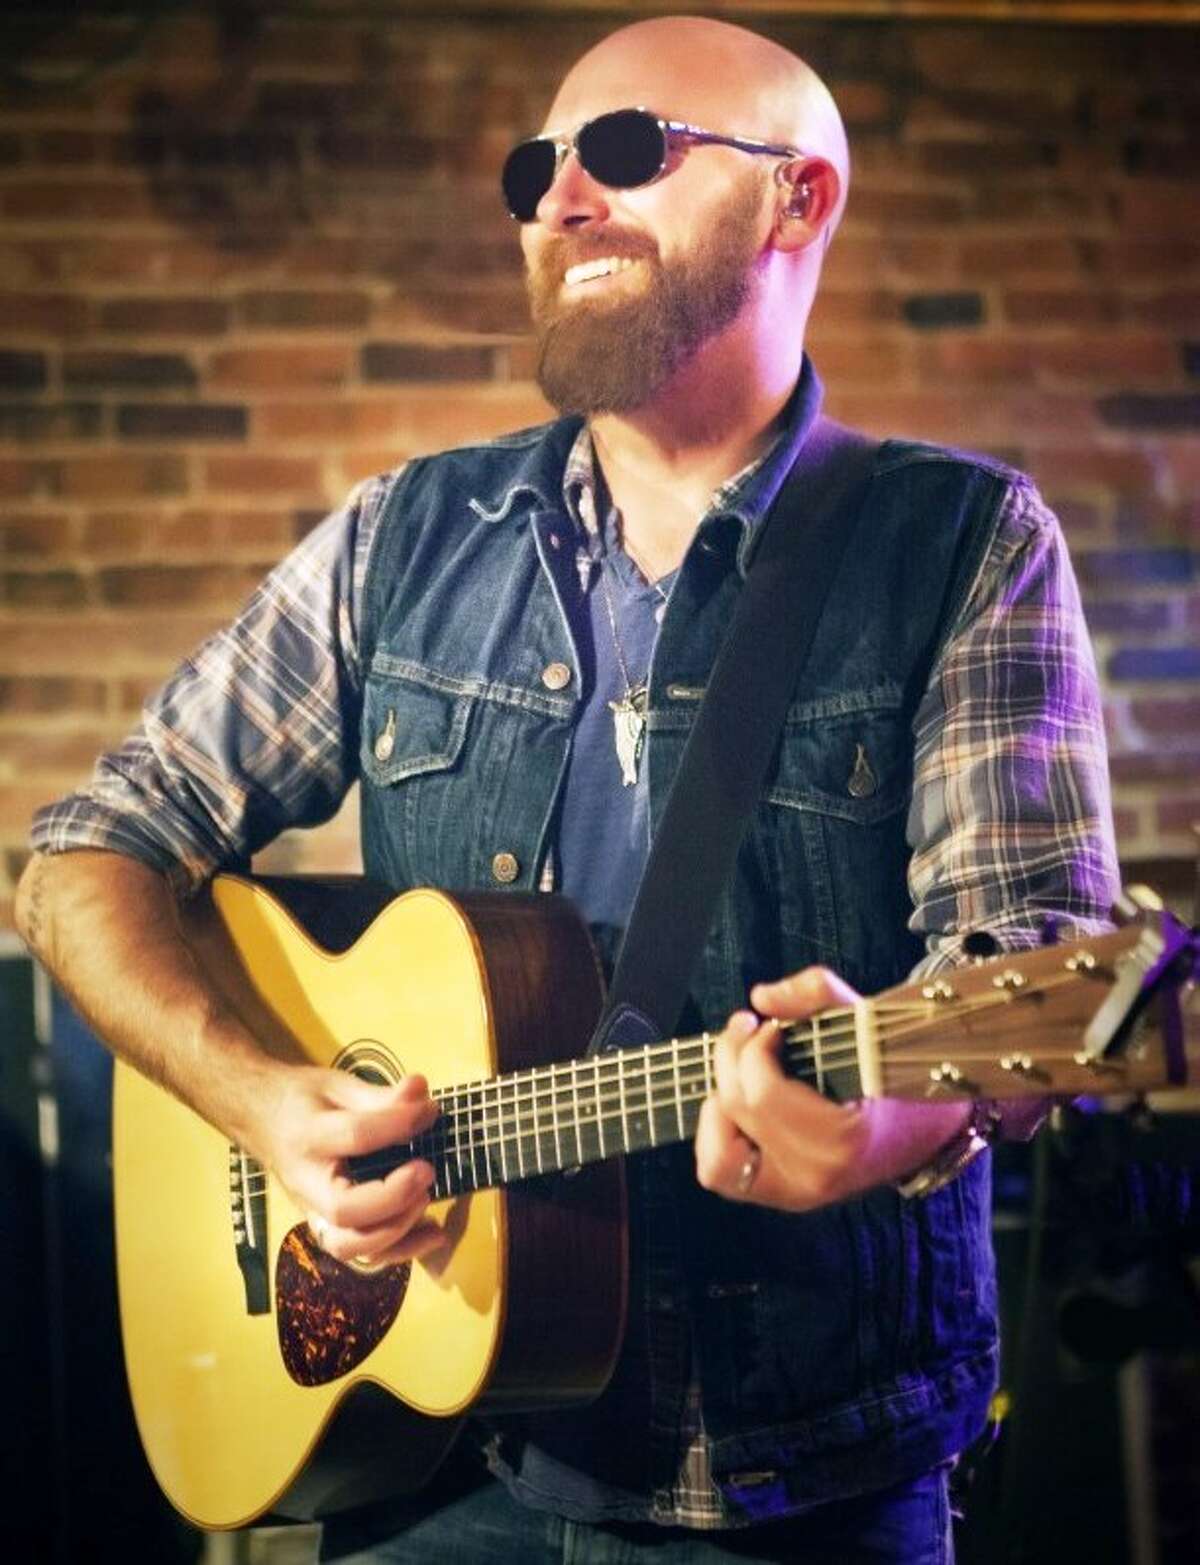 Texas Music star, singer-songwriter Corey Smith